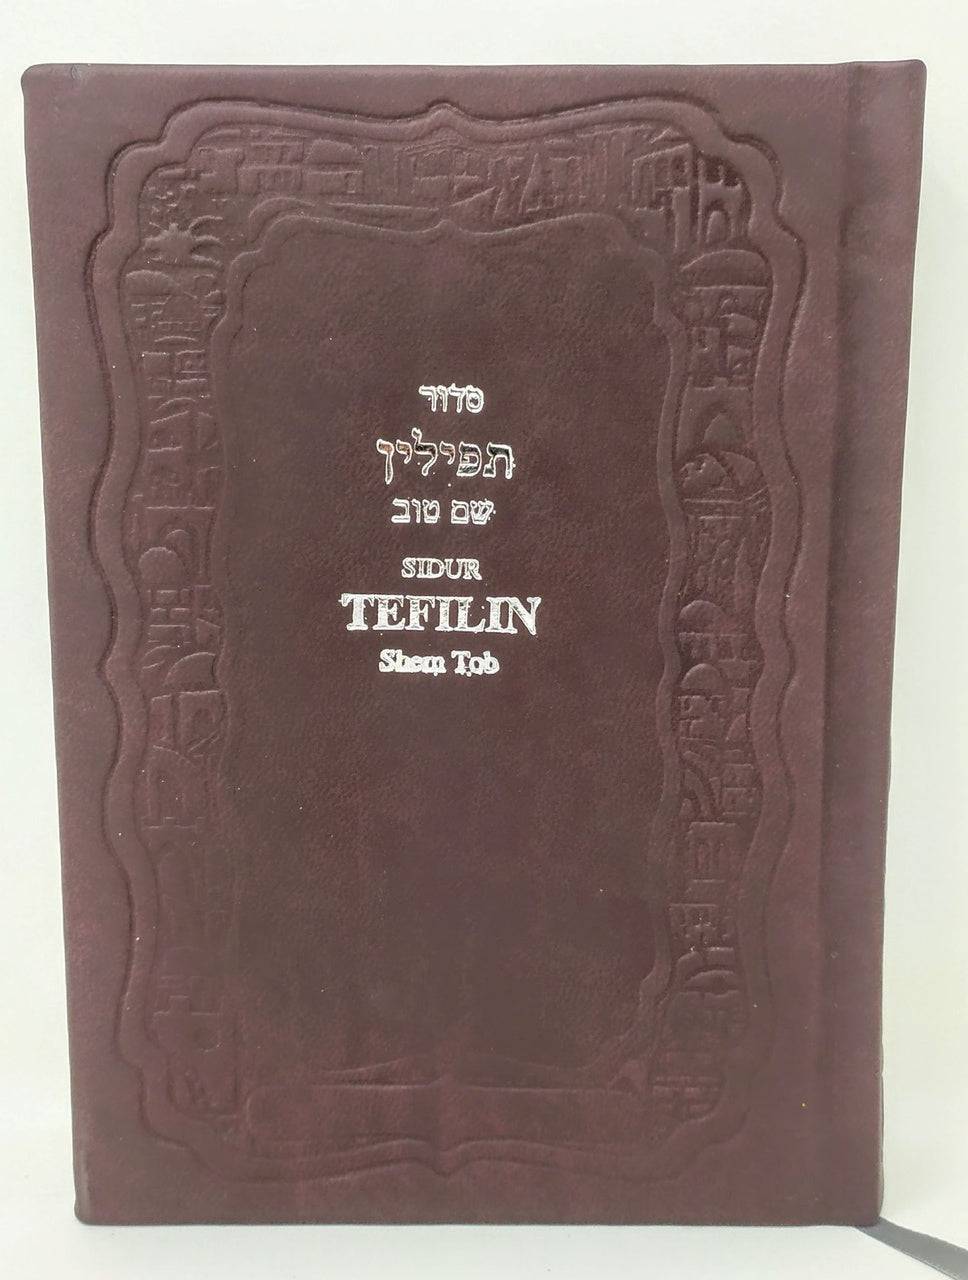 Sidur tefilin Shem Tob grande pasta dura varios colores - Libreria Jerusalem Centro